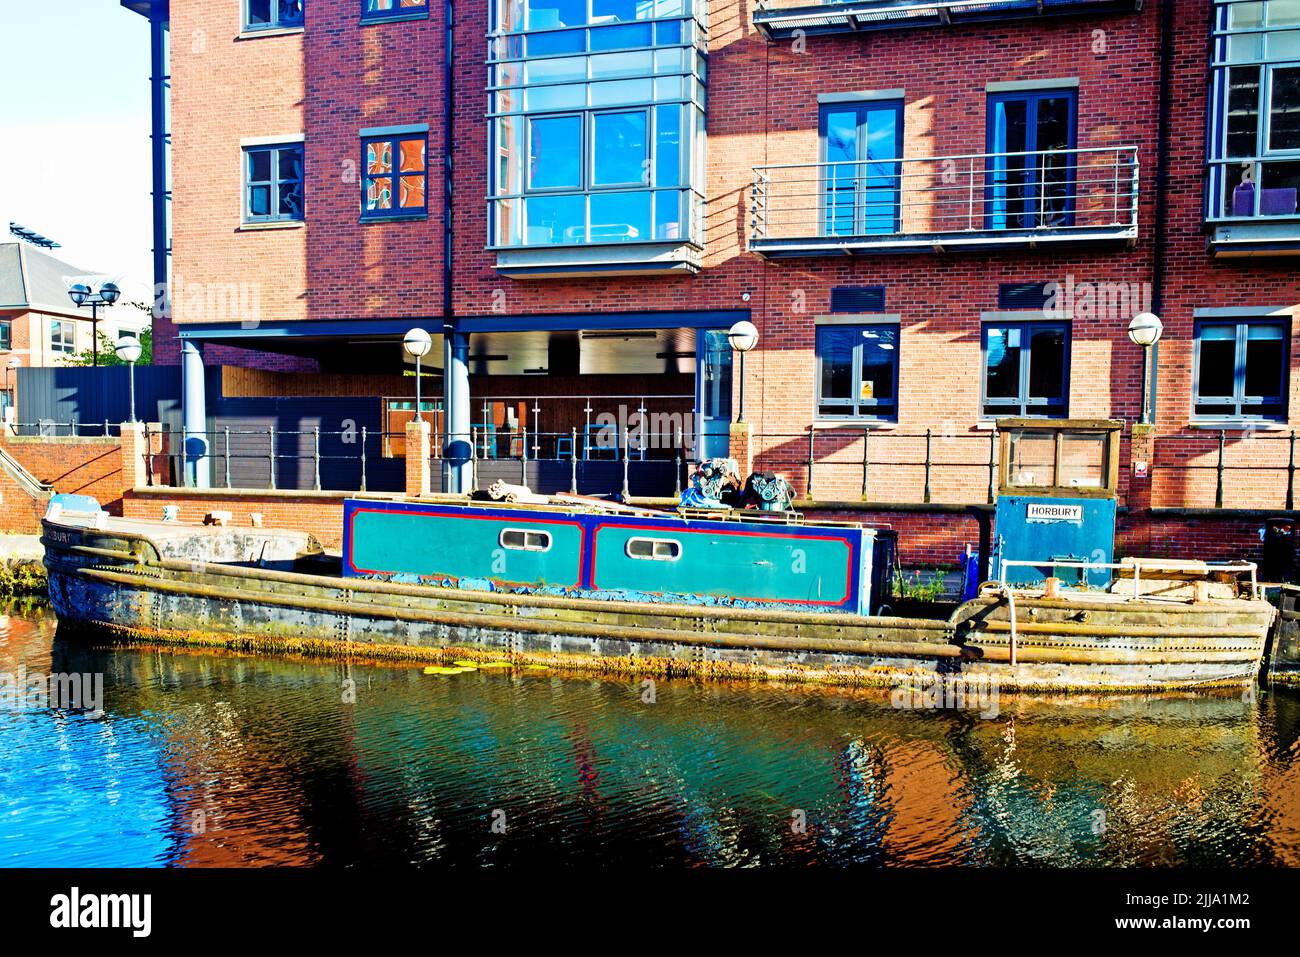 Canal Boat in Granary Wharf, Leeds, England Stock Photo